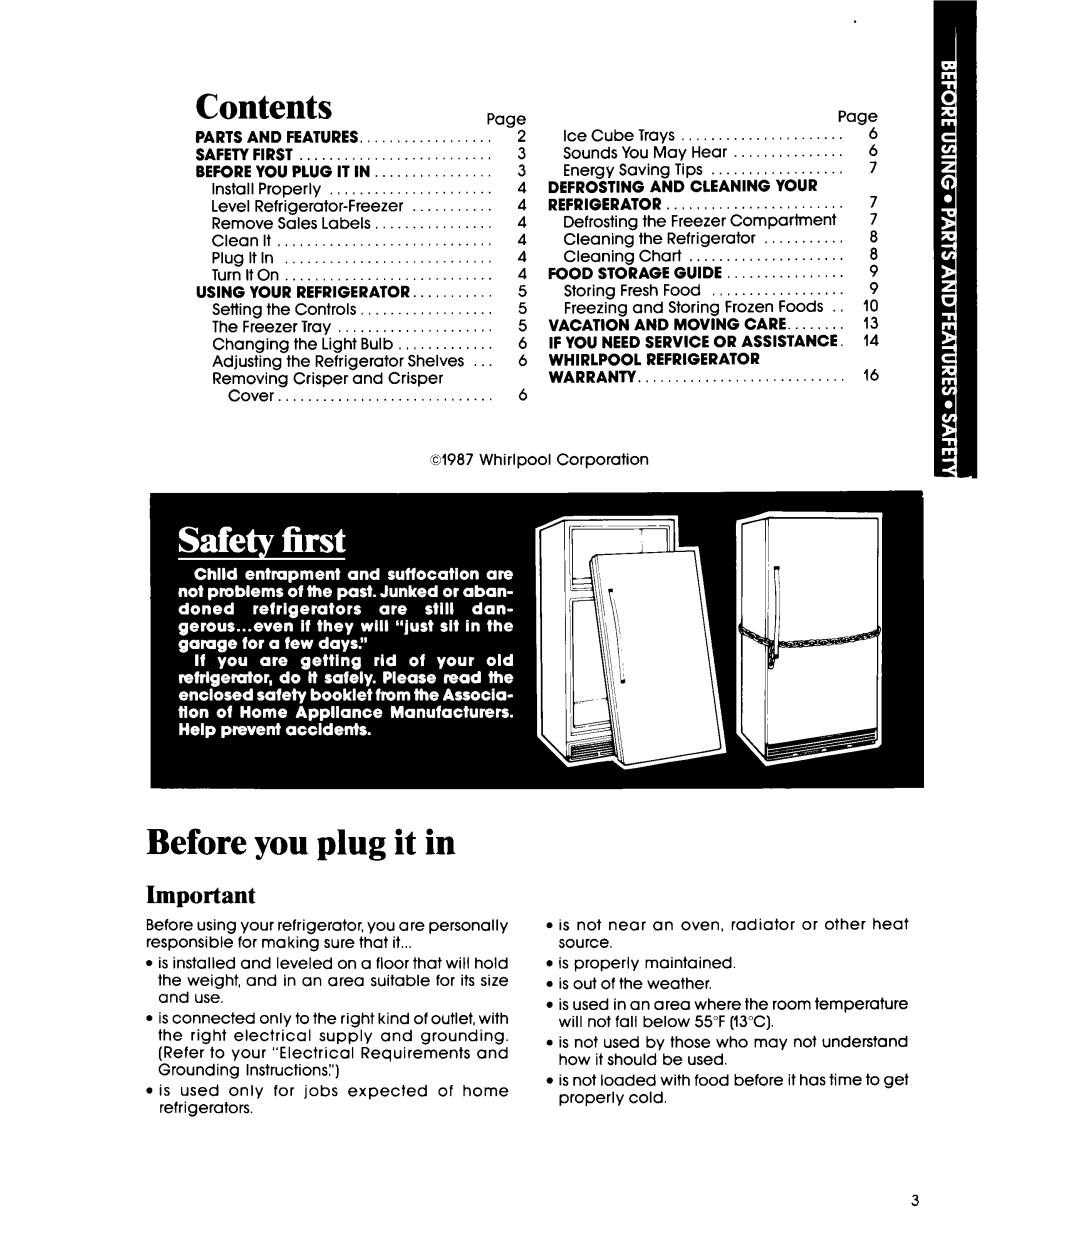 Whirlpool EL13SC, EL11SC manual Contents, Before you plug it in 